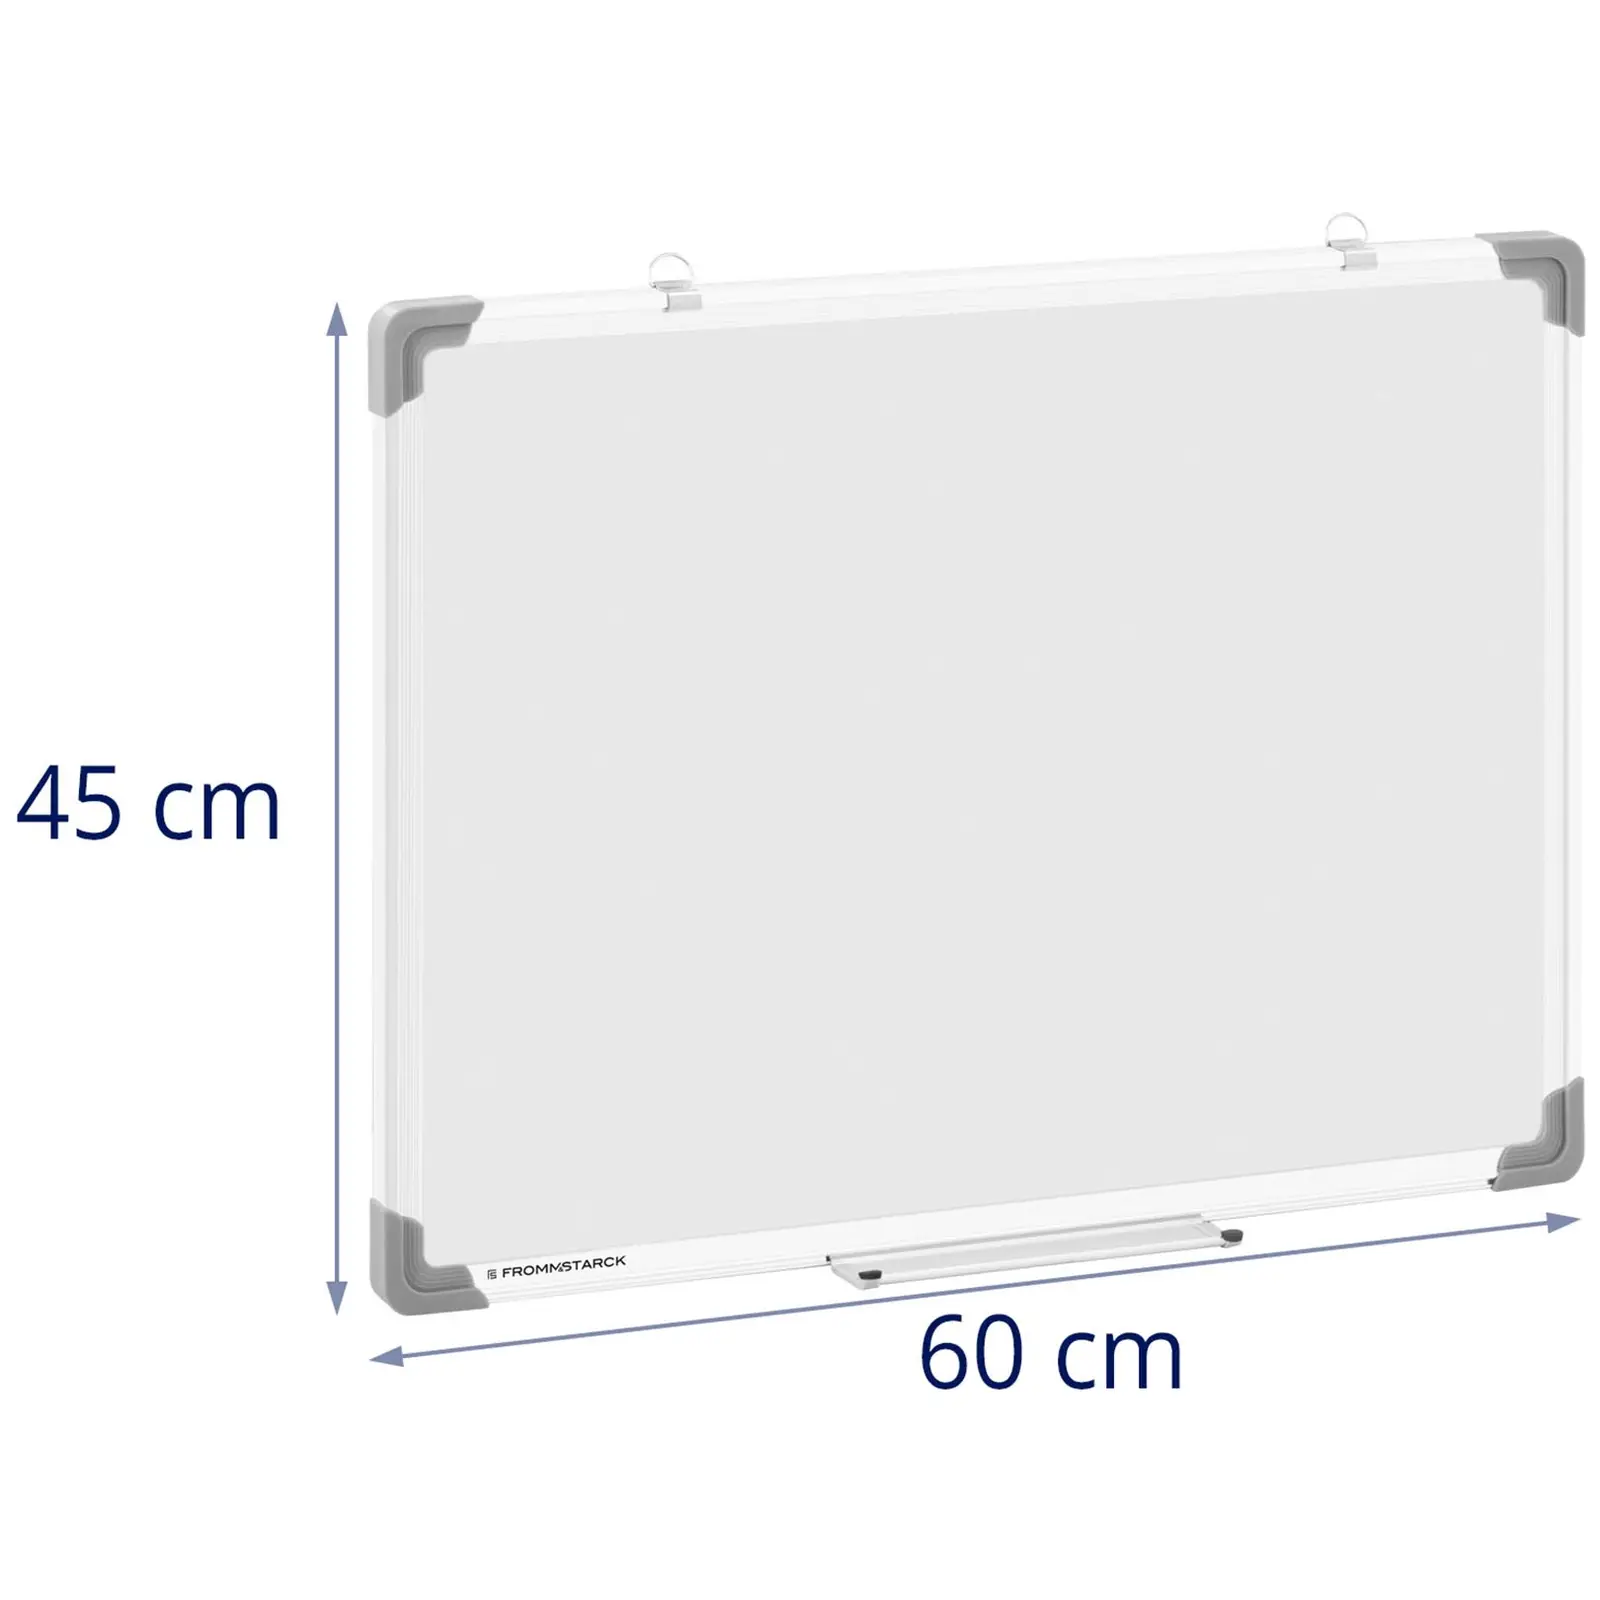 Lavagna magnetica bianca per pennarelli - 60 x 45 cm